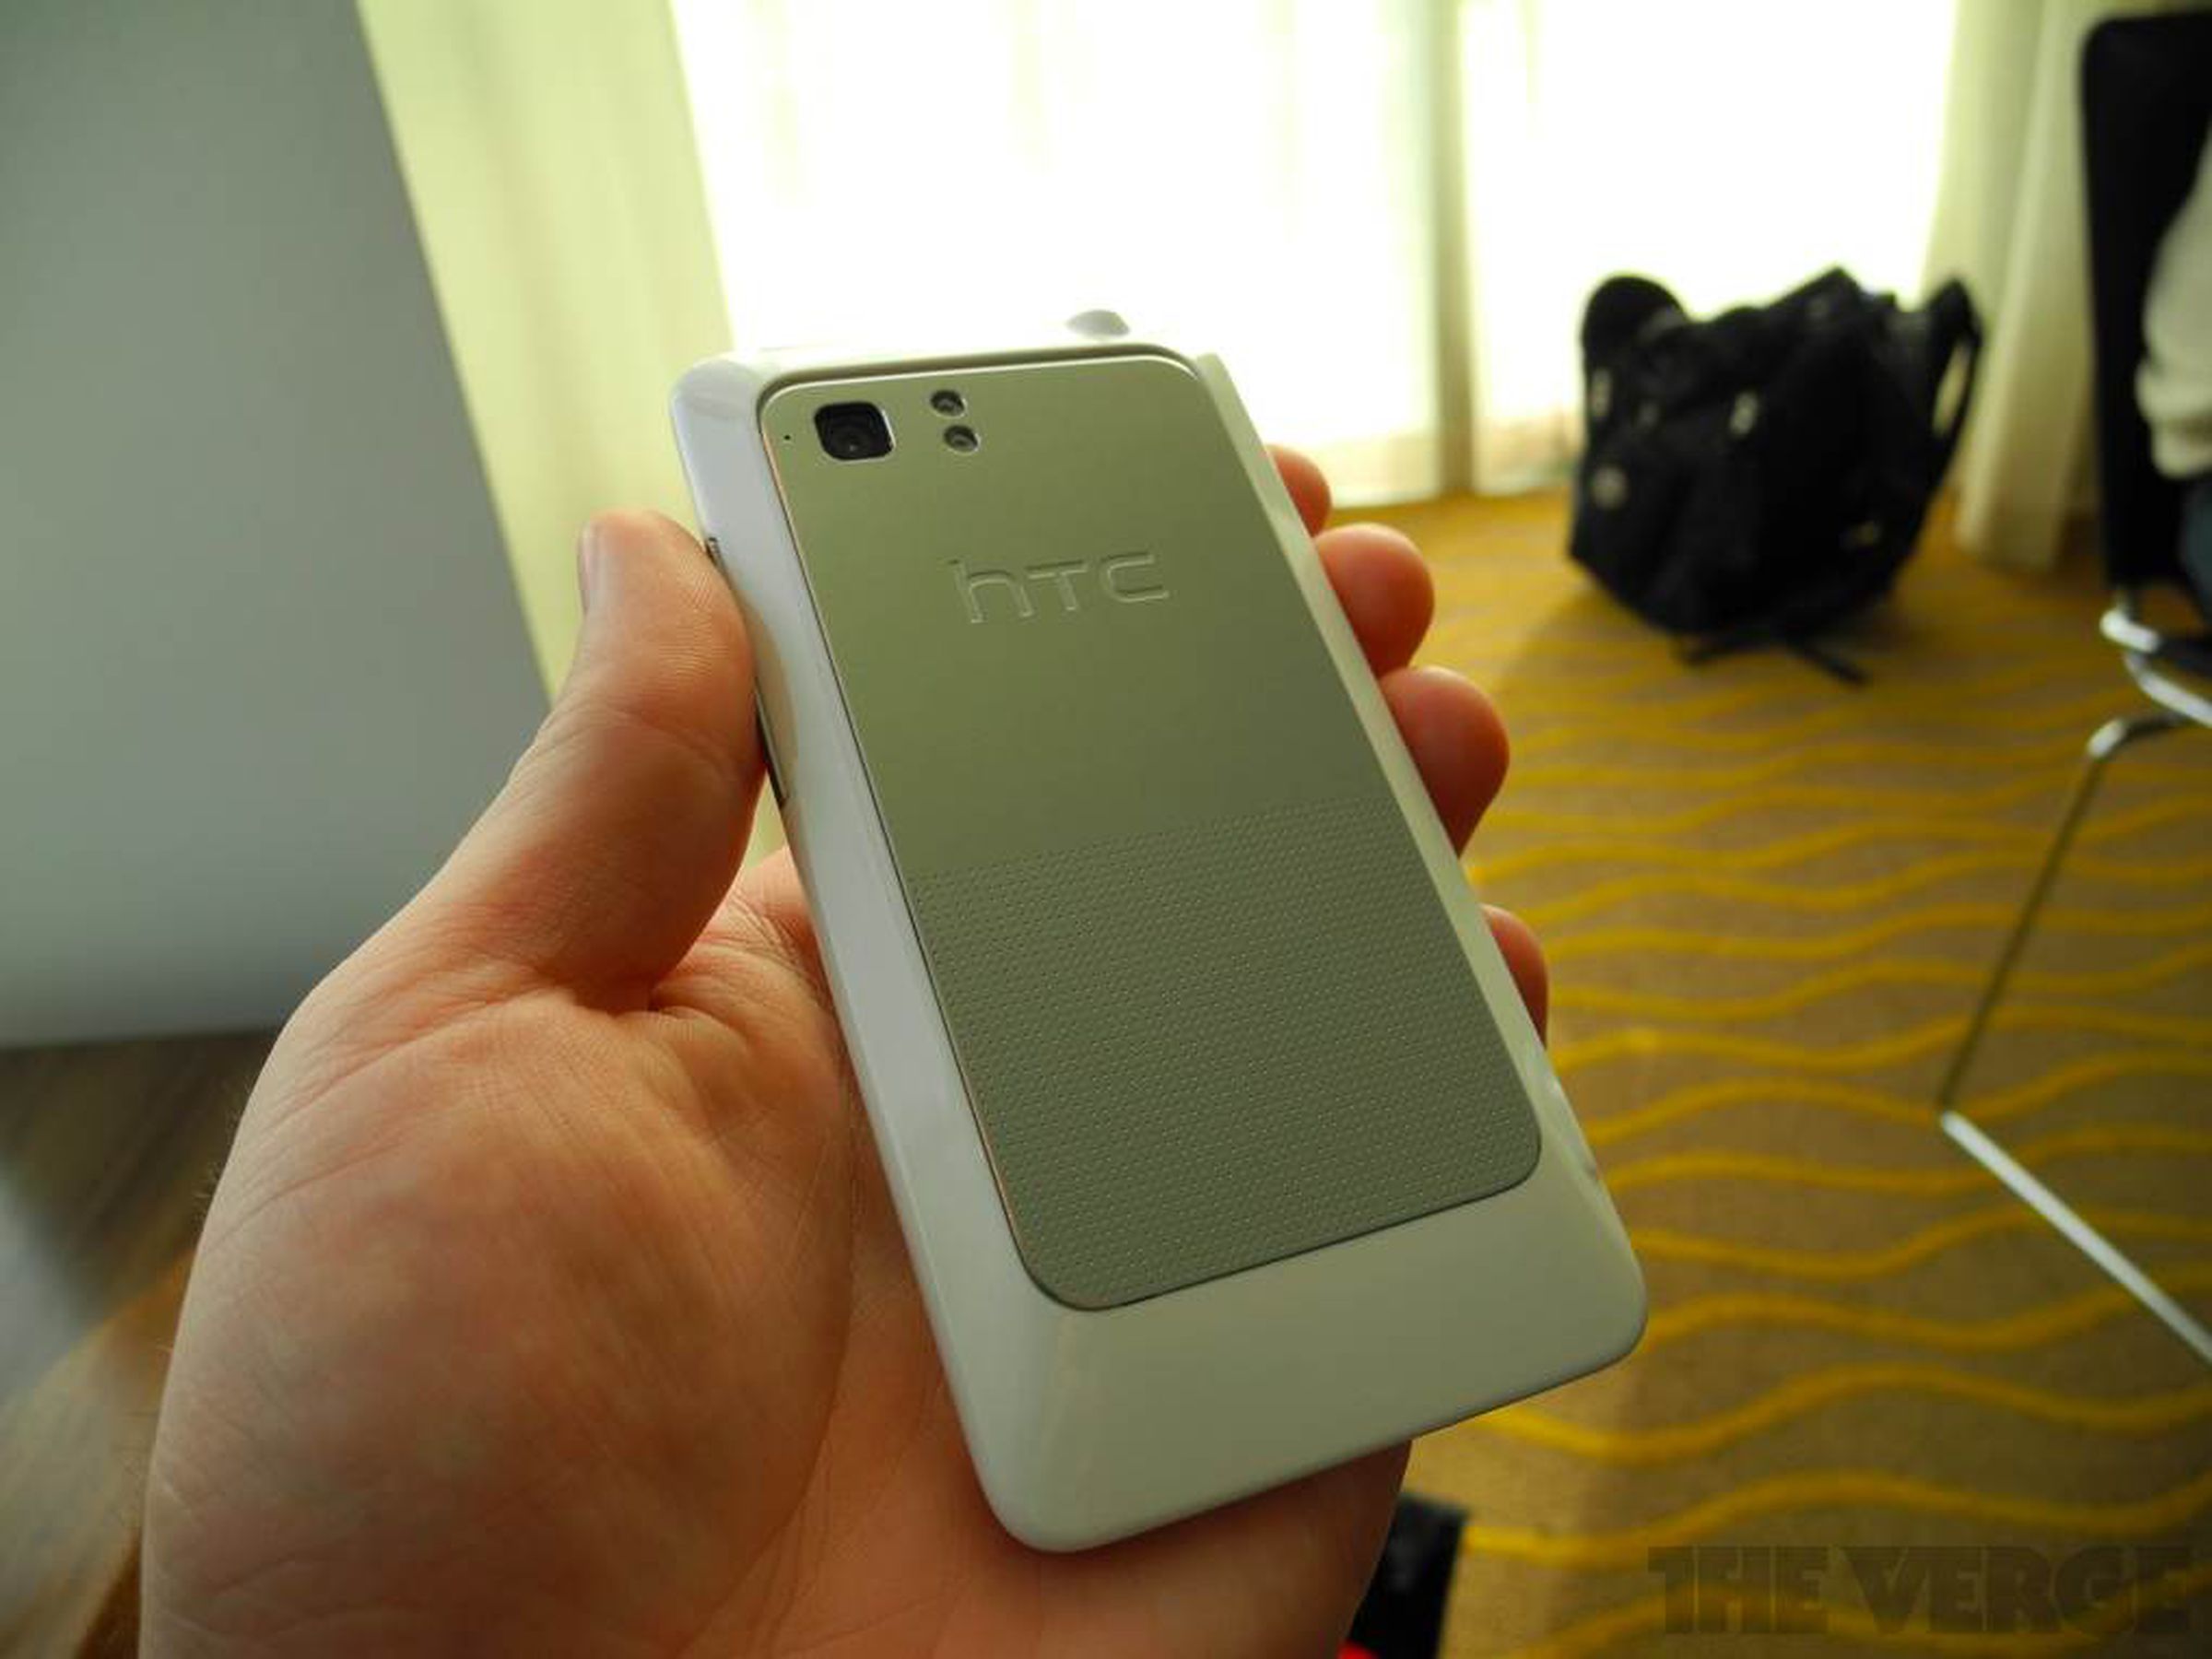 HTC Vivid hands-on